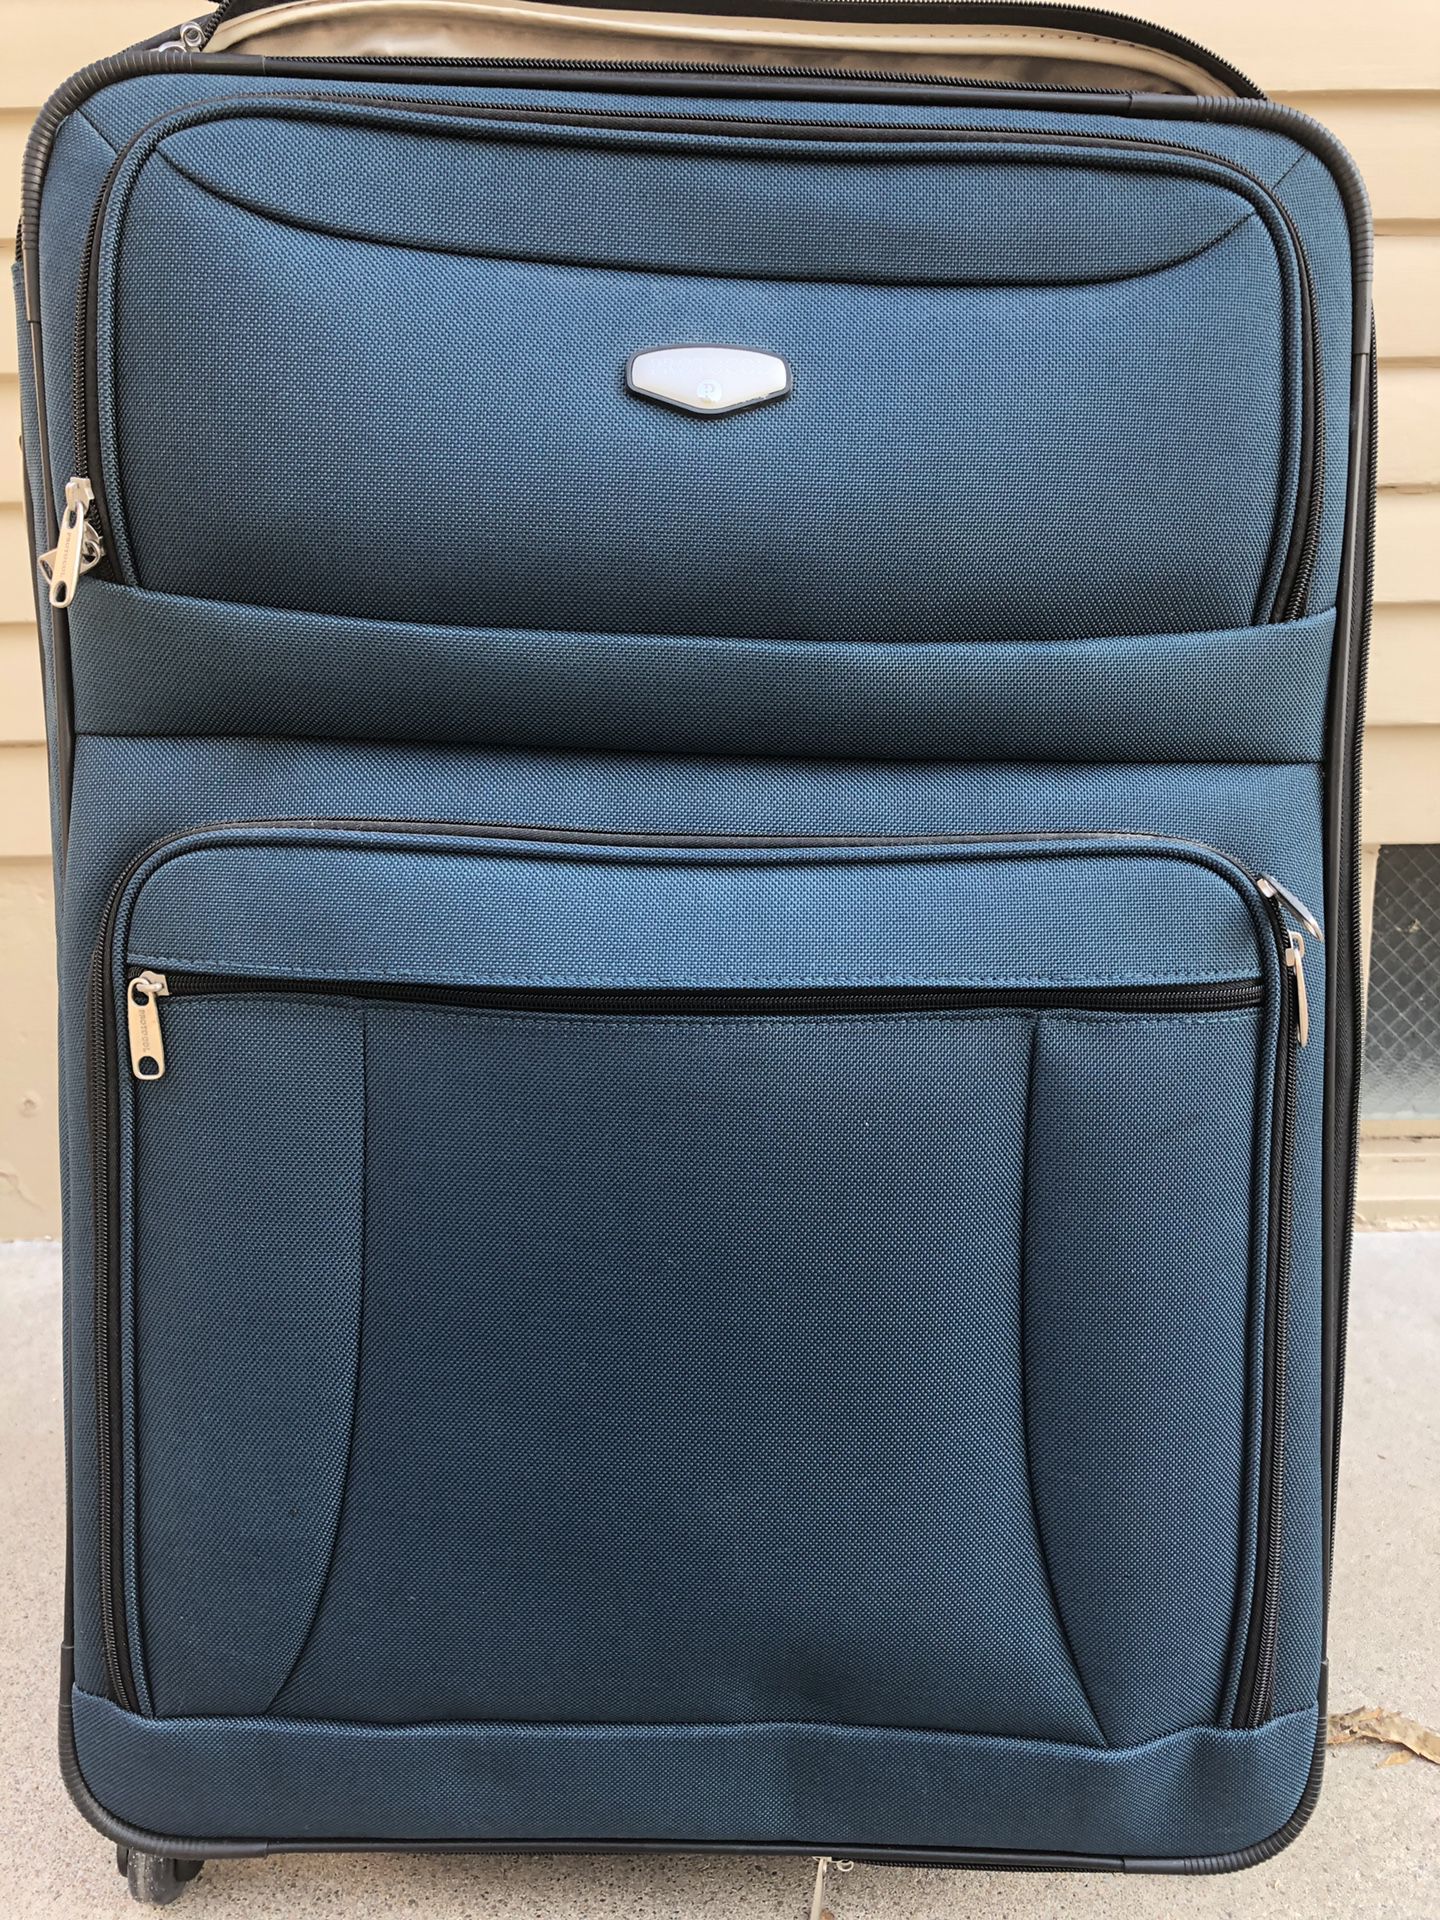 Teal three-piece Protocol luggage.